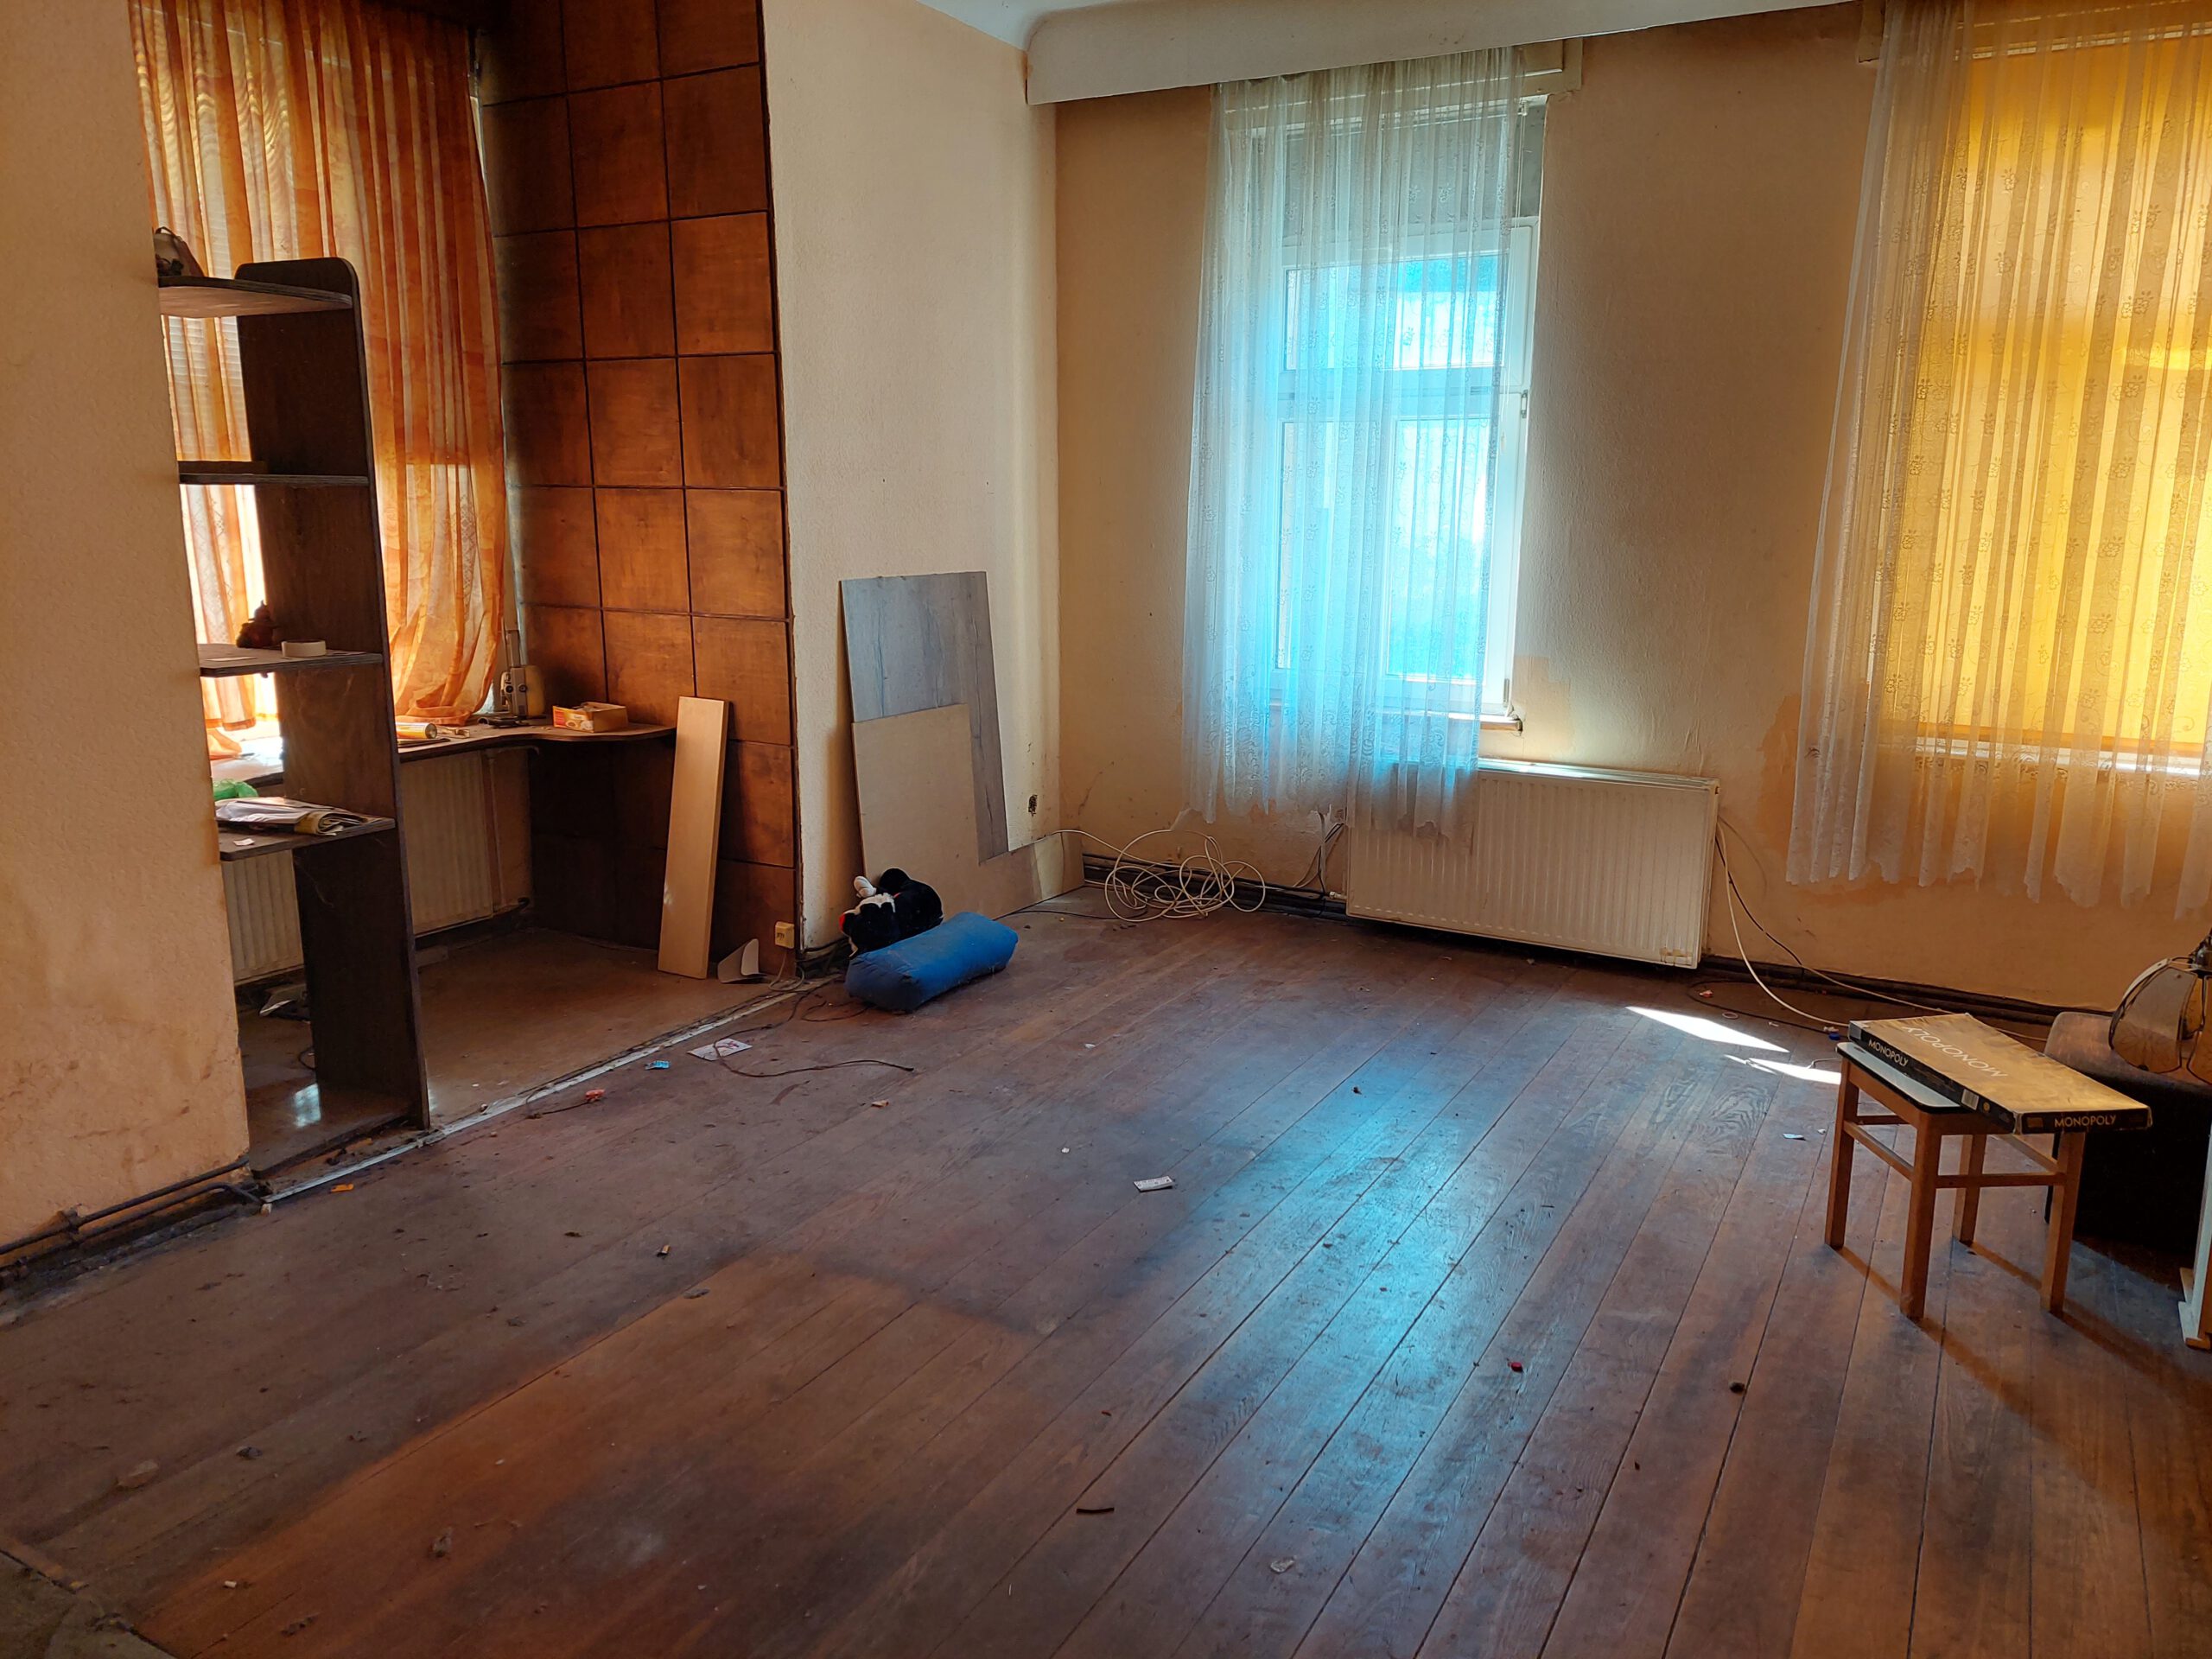 Mehrfamilienhaus in Mücheln/G. - Zimmer im Erdgeschoss